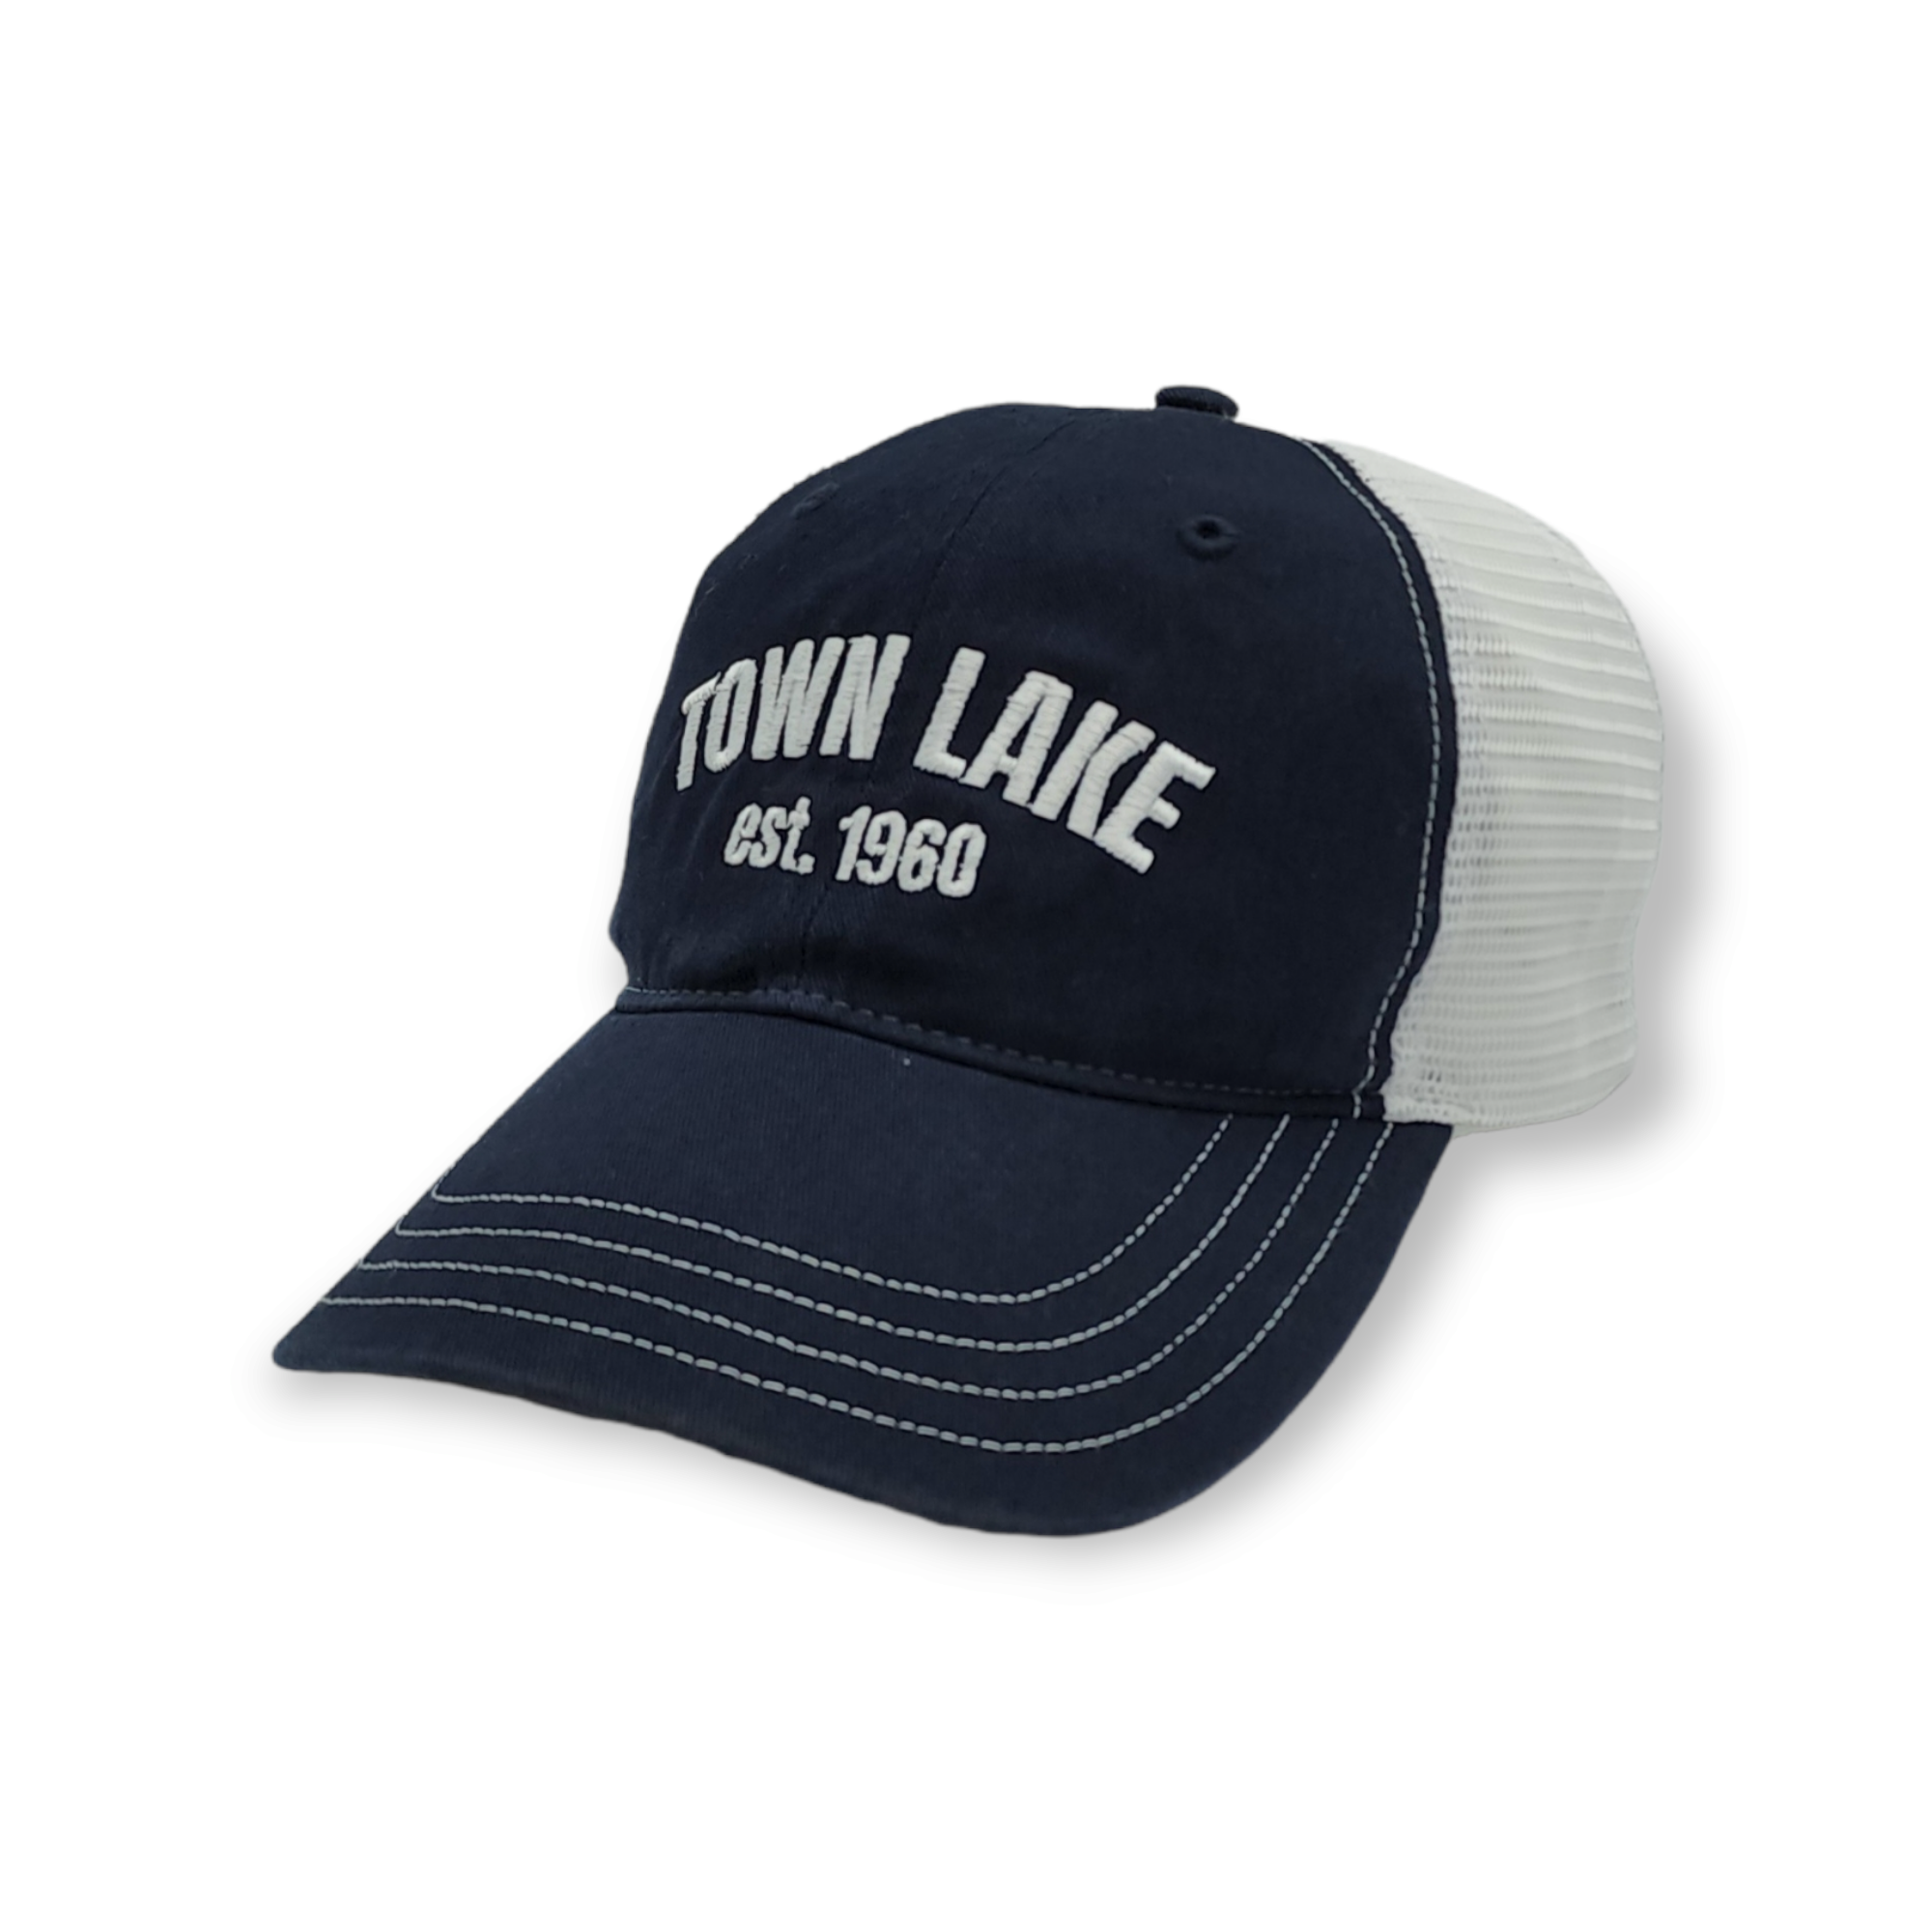 Town Lake Trucker Hat - Retro Austin Apparel